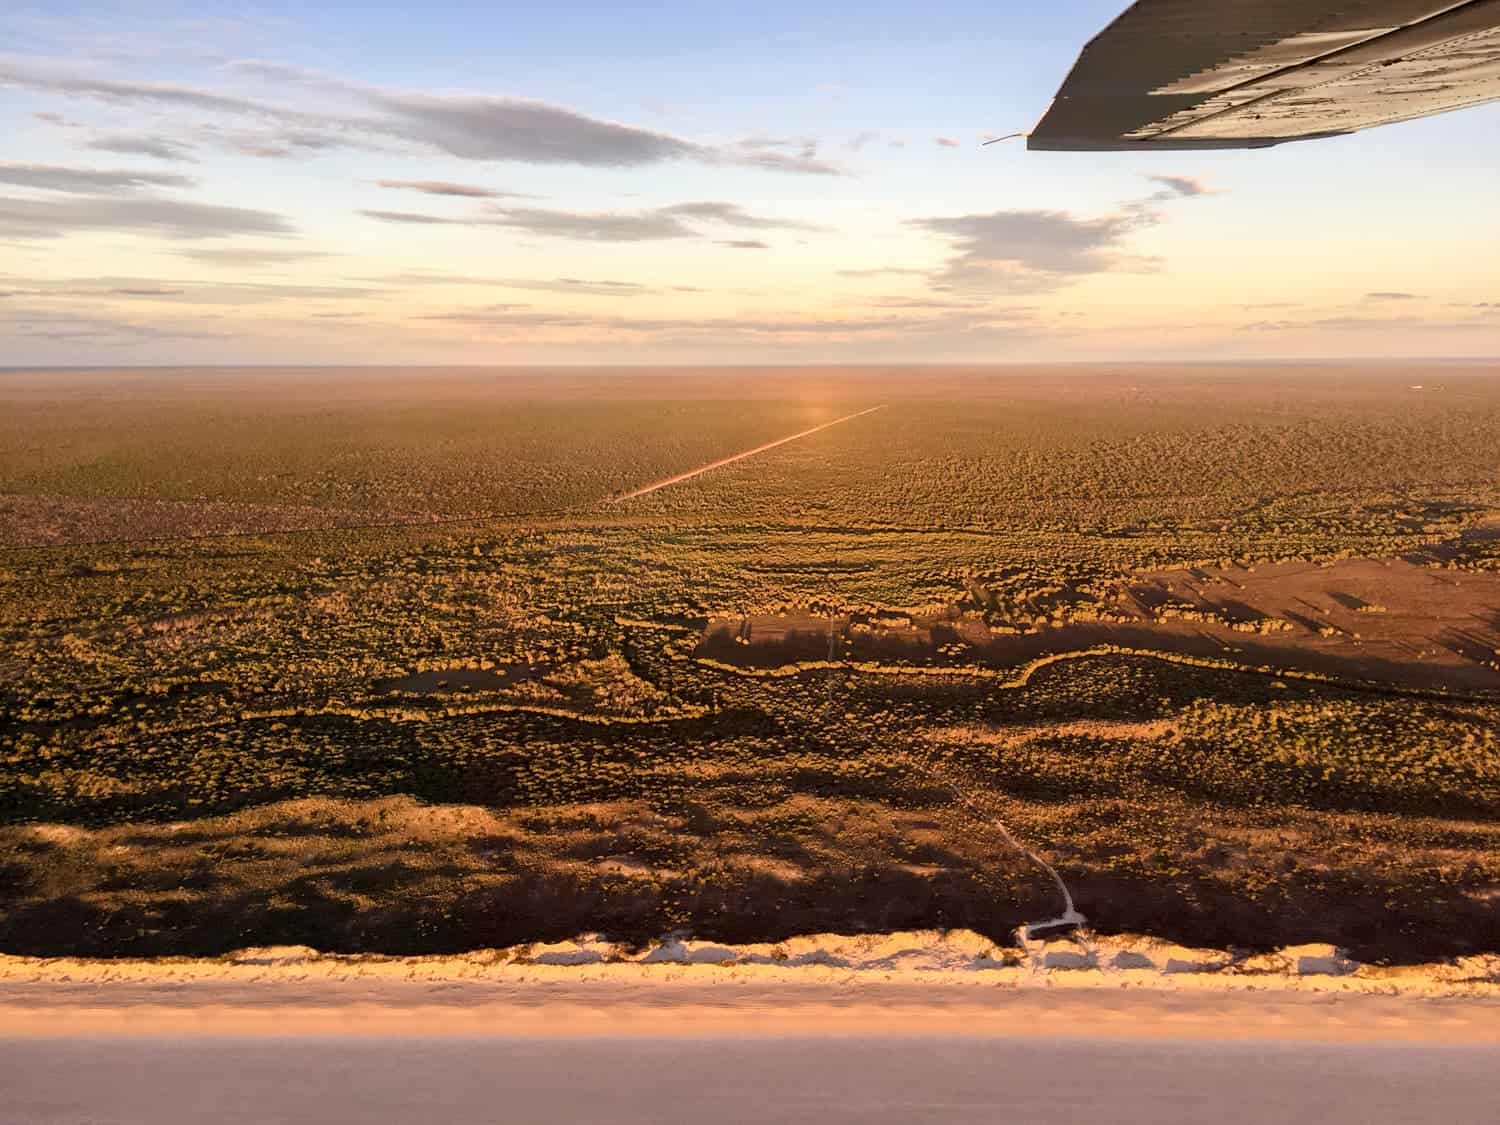 Broome Kimberly Outback Western Australia scenic flight